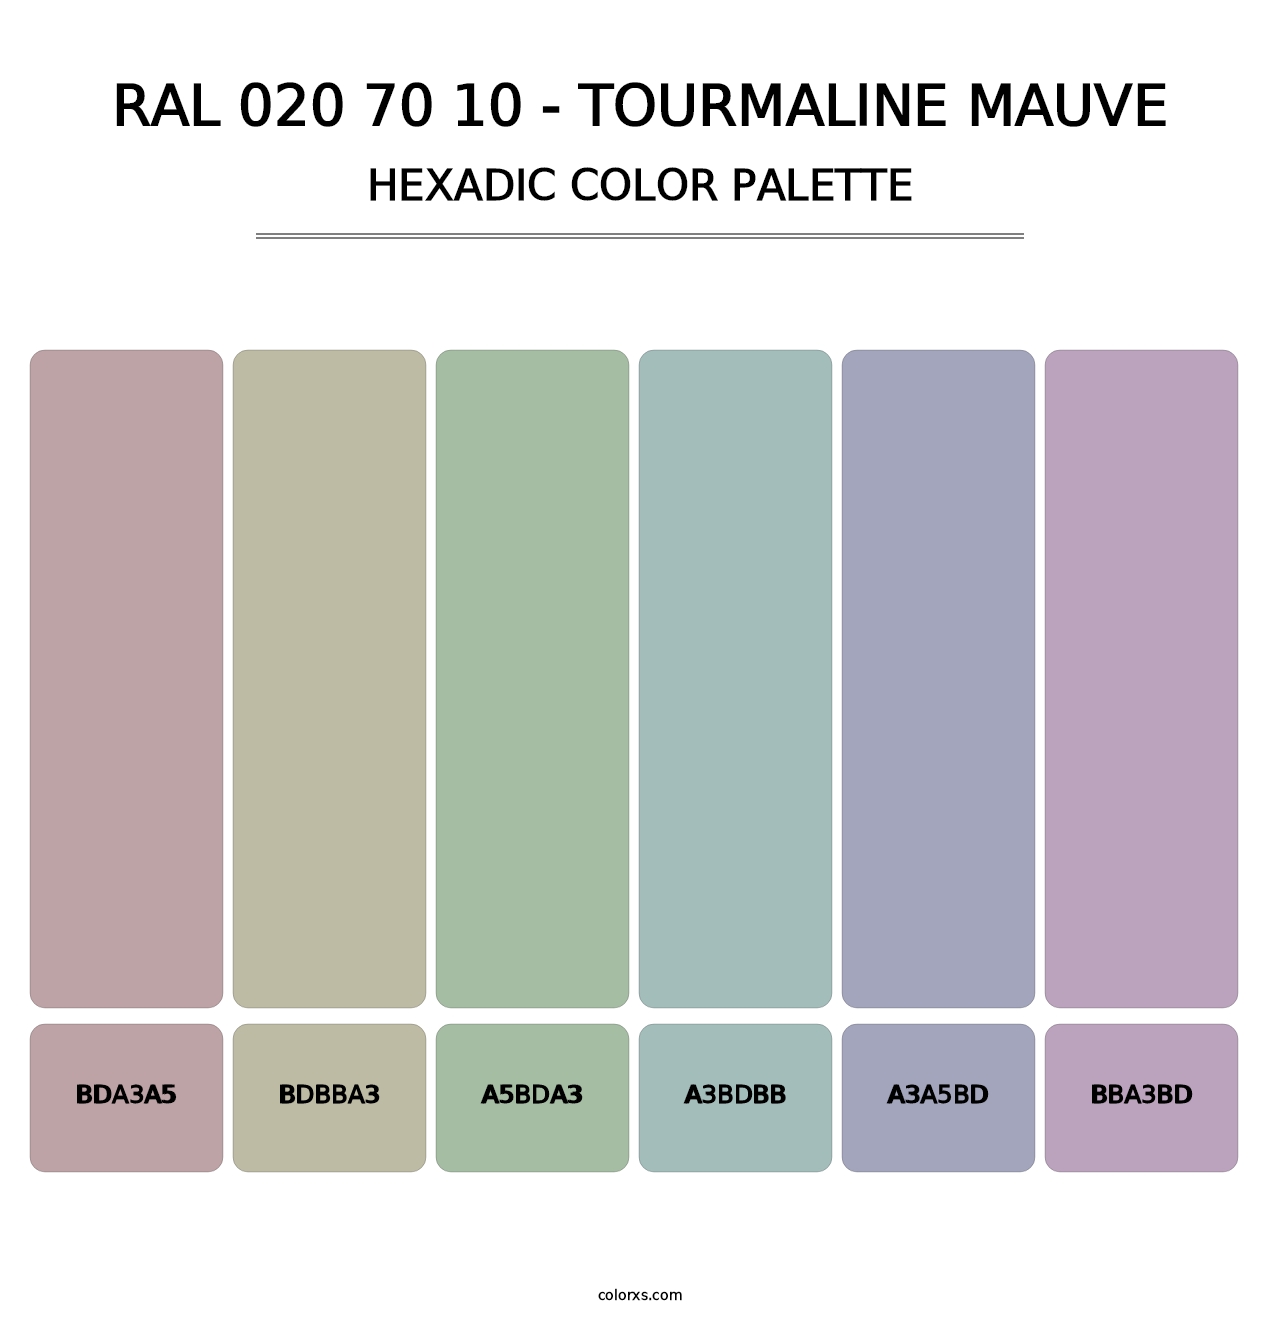 RAL 020 70 10 - Tourmaline Mauve - Hexadic Color Palette